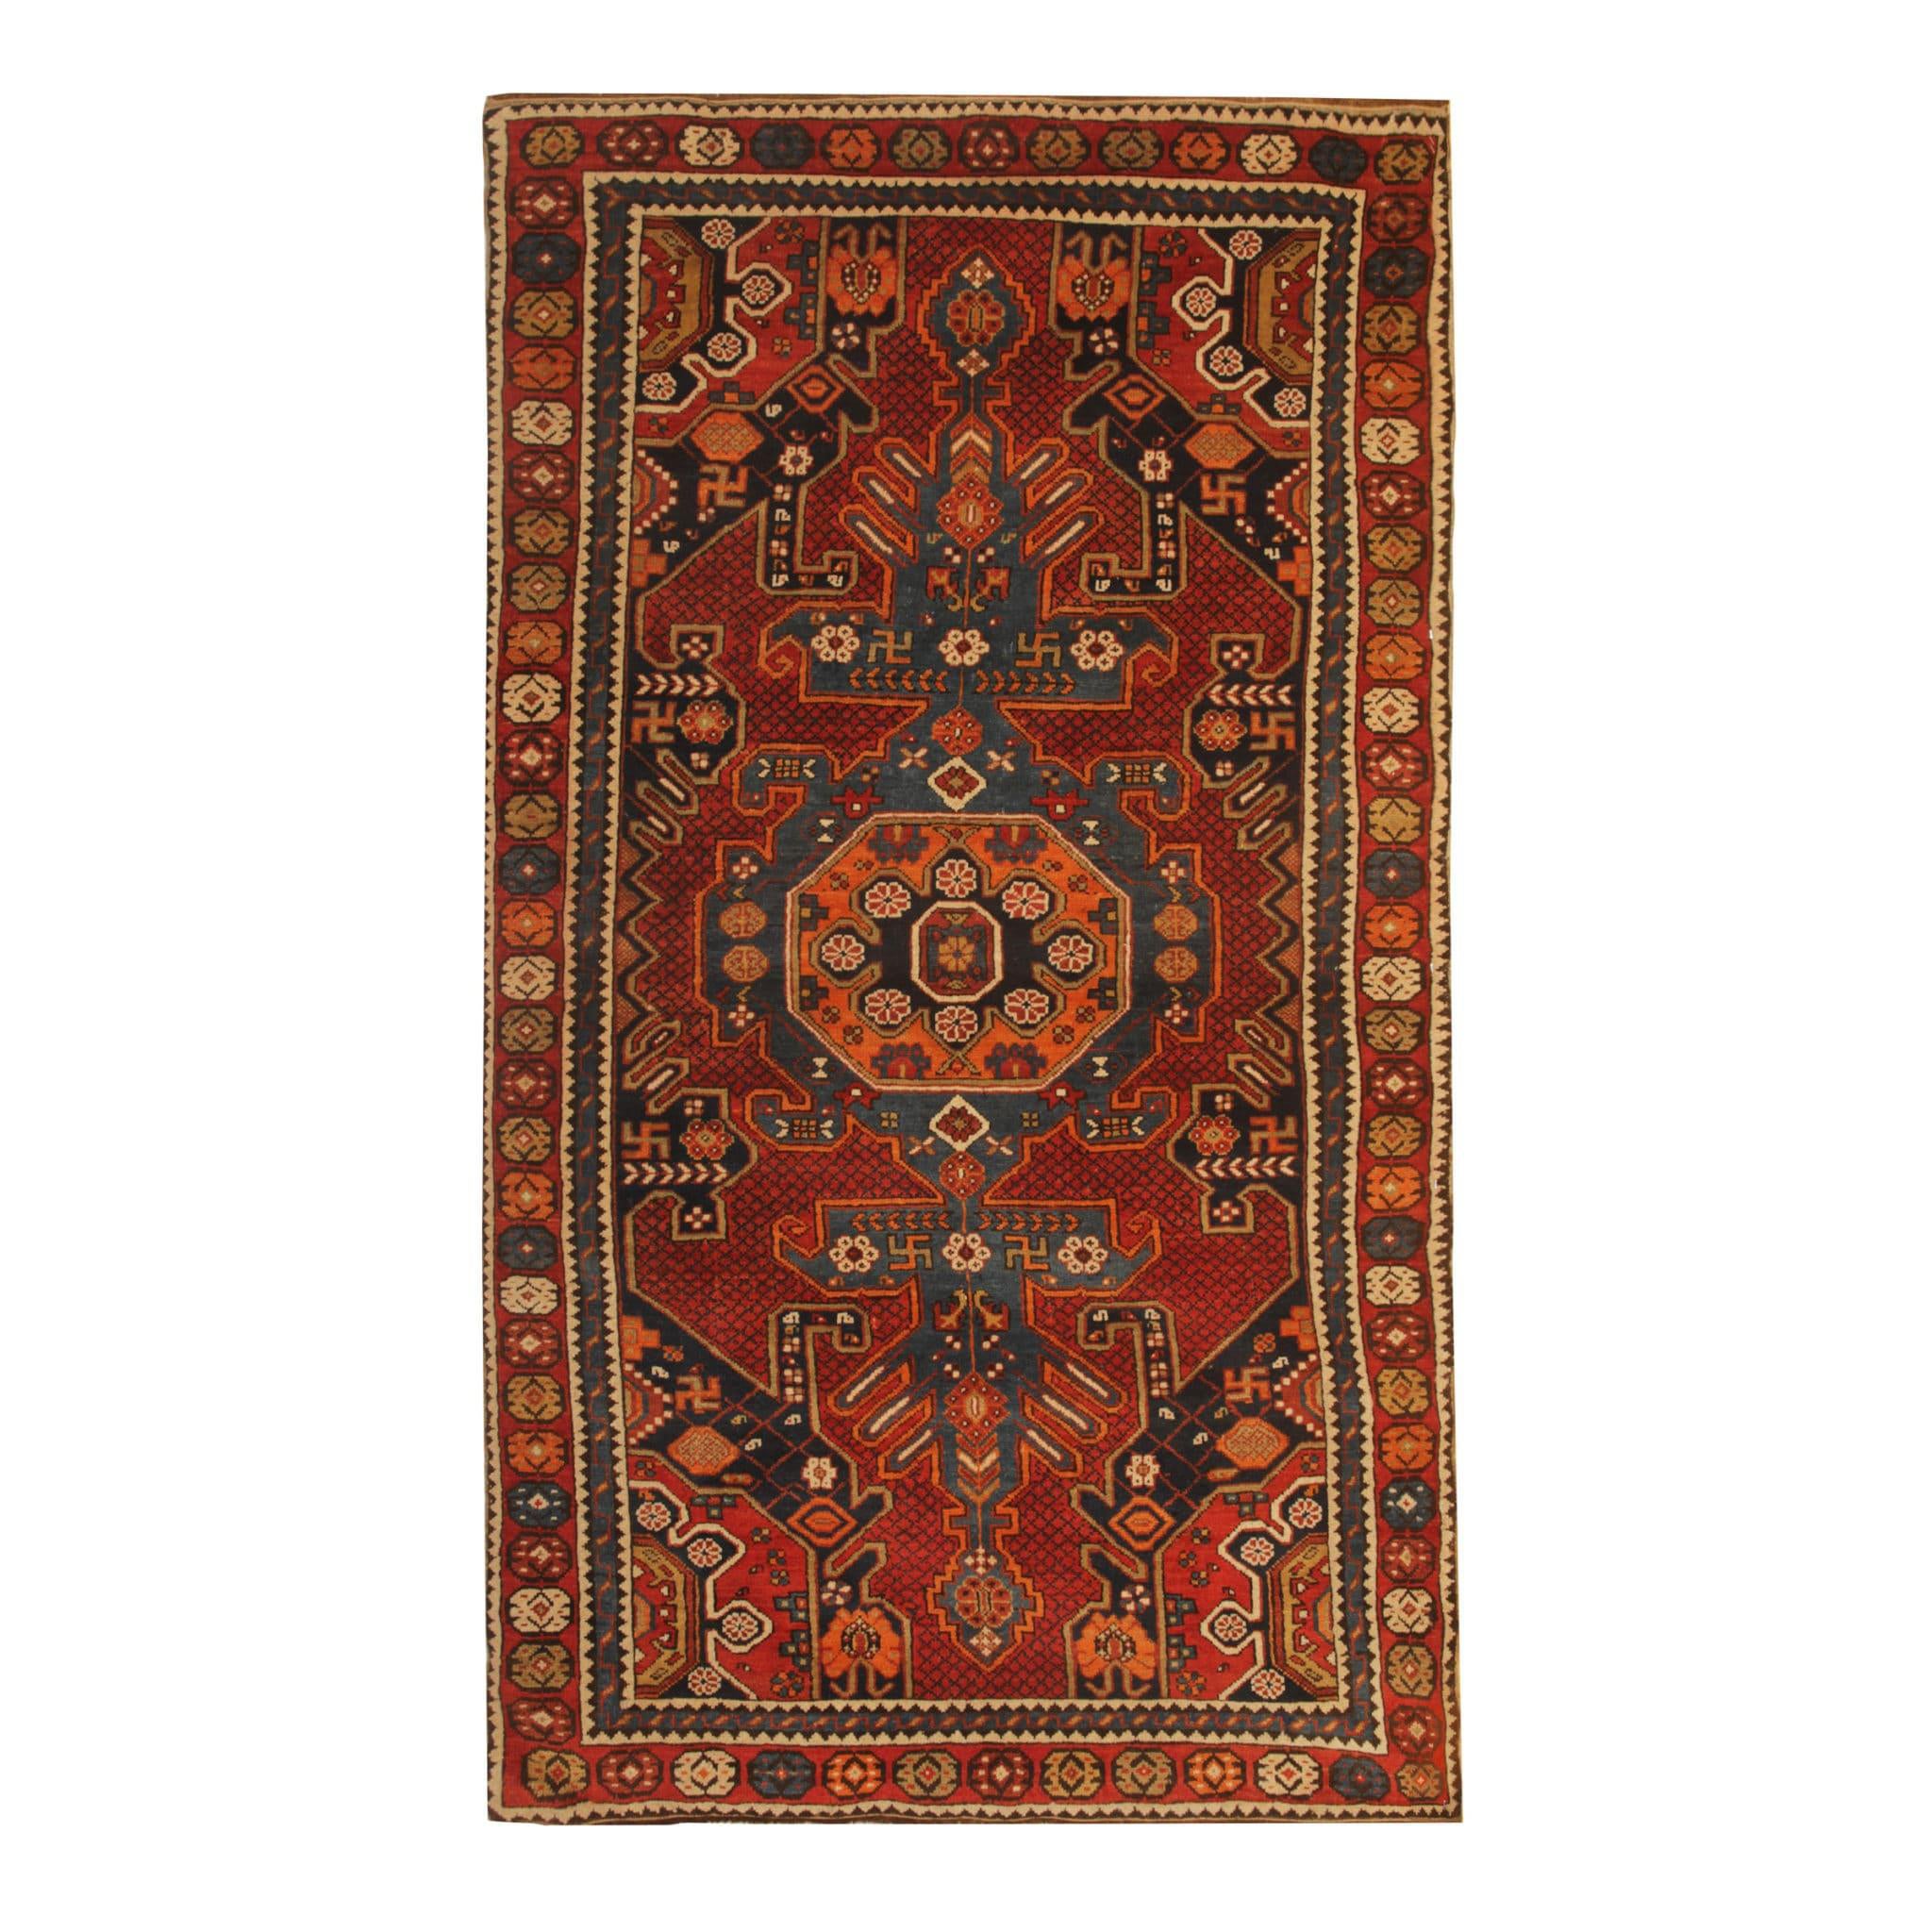 Seltener antiker kaukasischer Medaillon-Teppich Kaukasischer handgefertigter Teppich aus kuba-Teppich